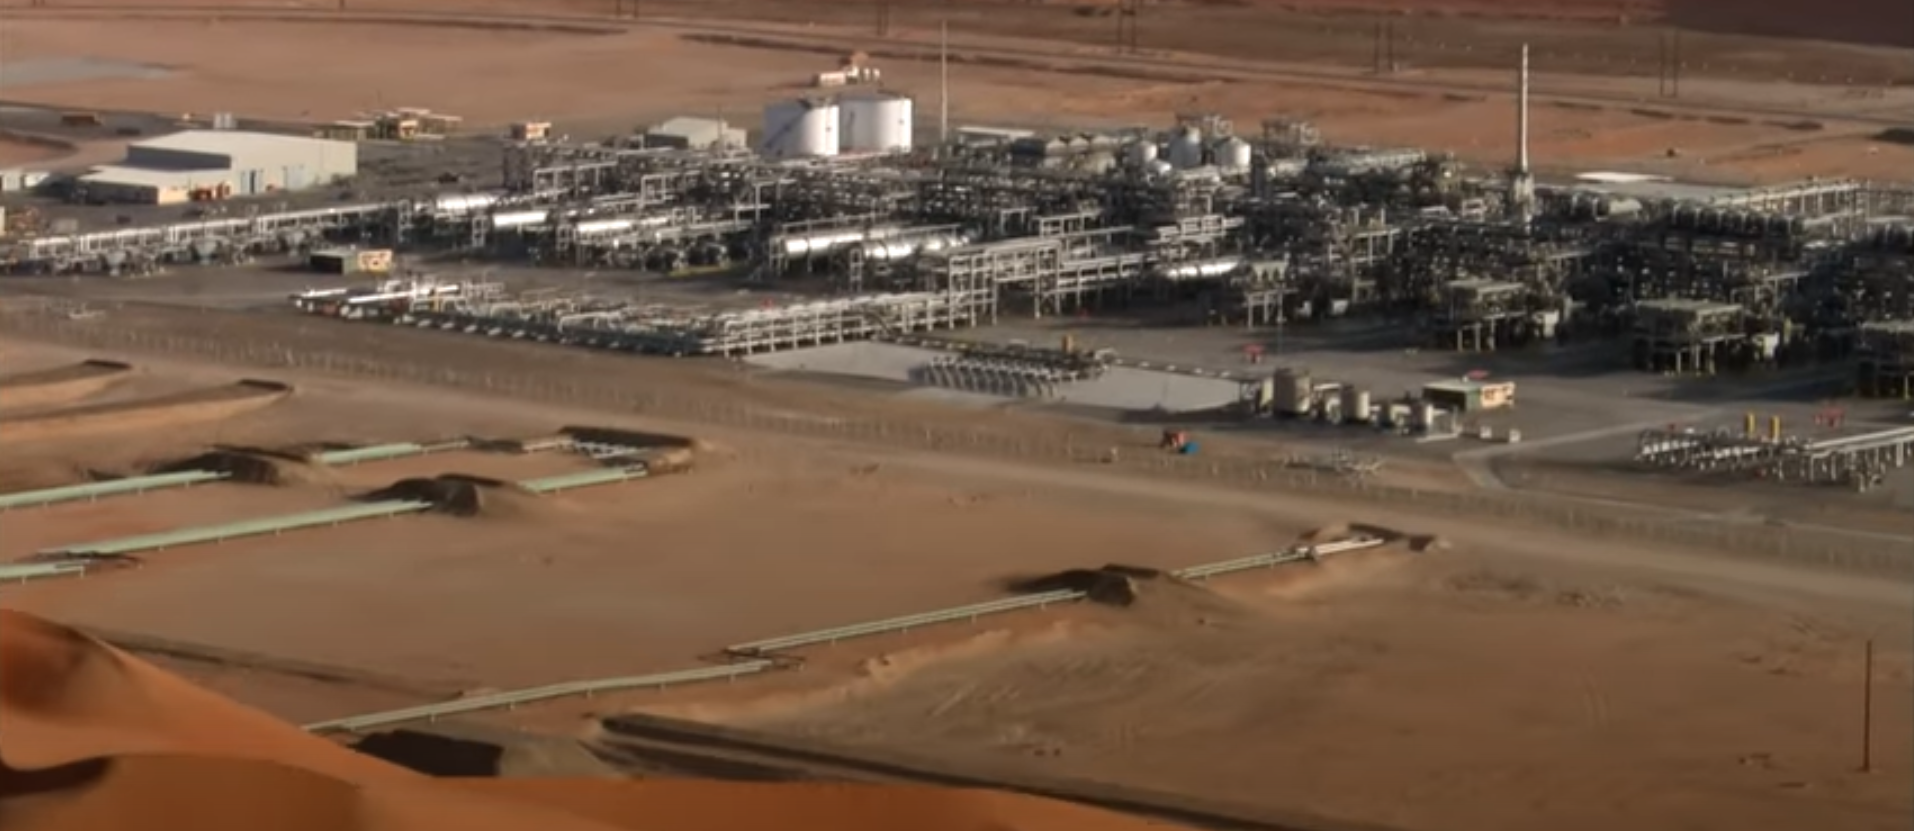 A so-called oil refinery "oasis" in Saudi Arabia. [Screenshot/YouTube/60Minutes]